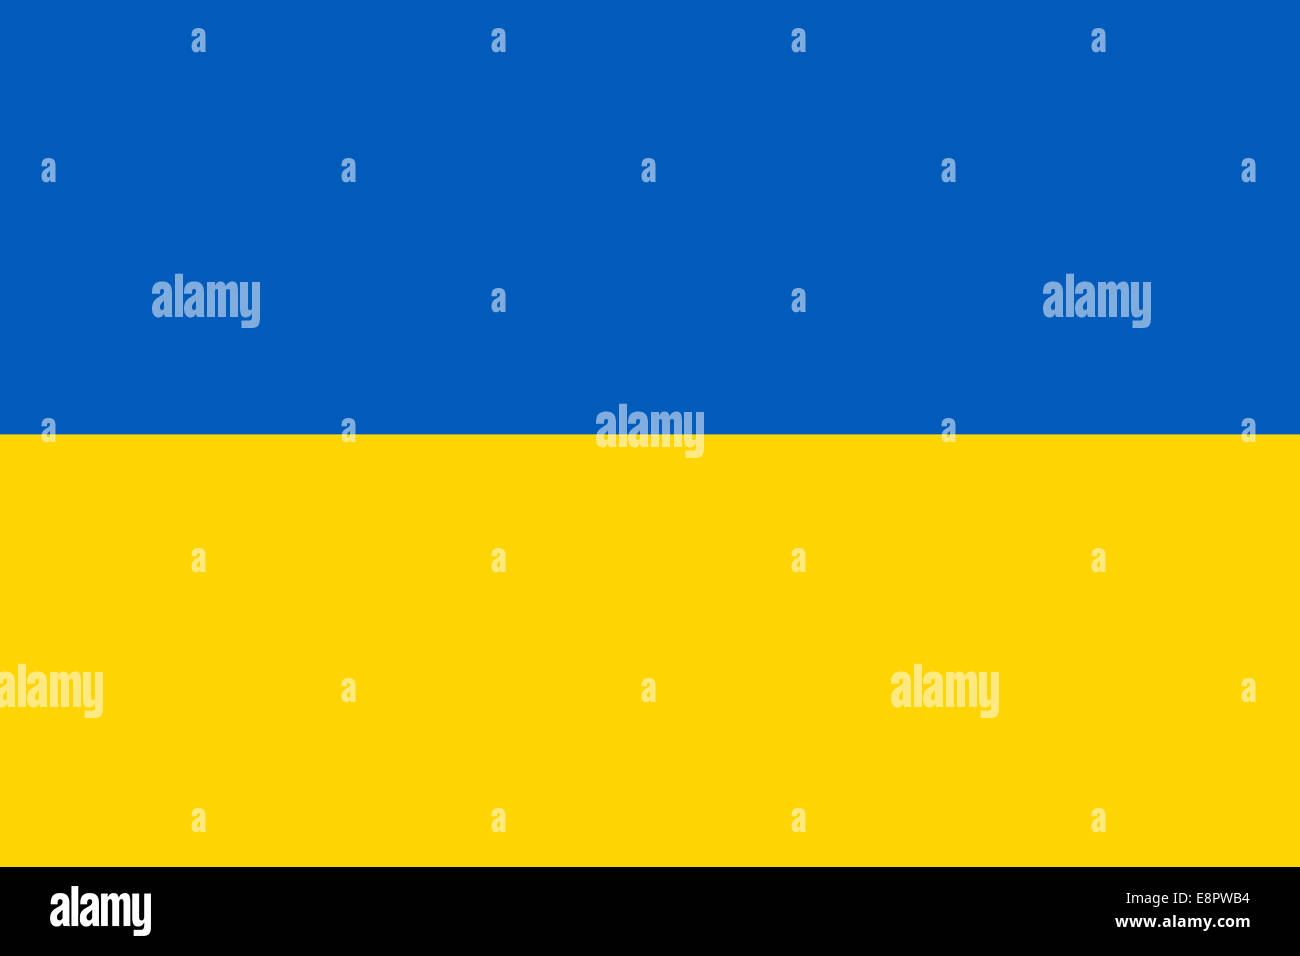 Flag of Ukraine - Ukrainian flag standard ratio - true RGB color mode Stock Photo